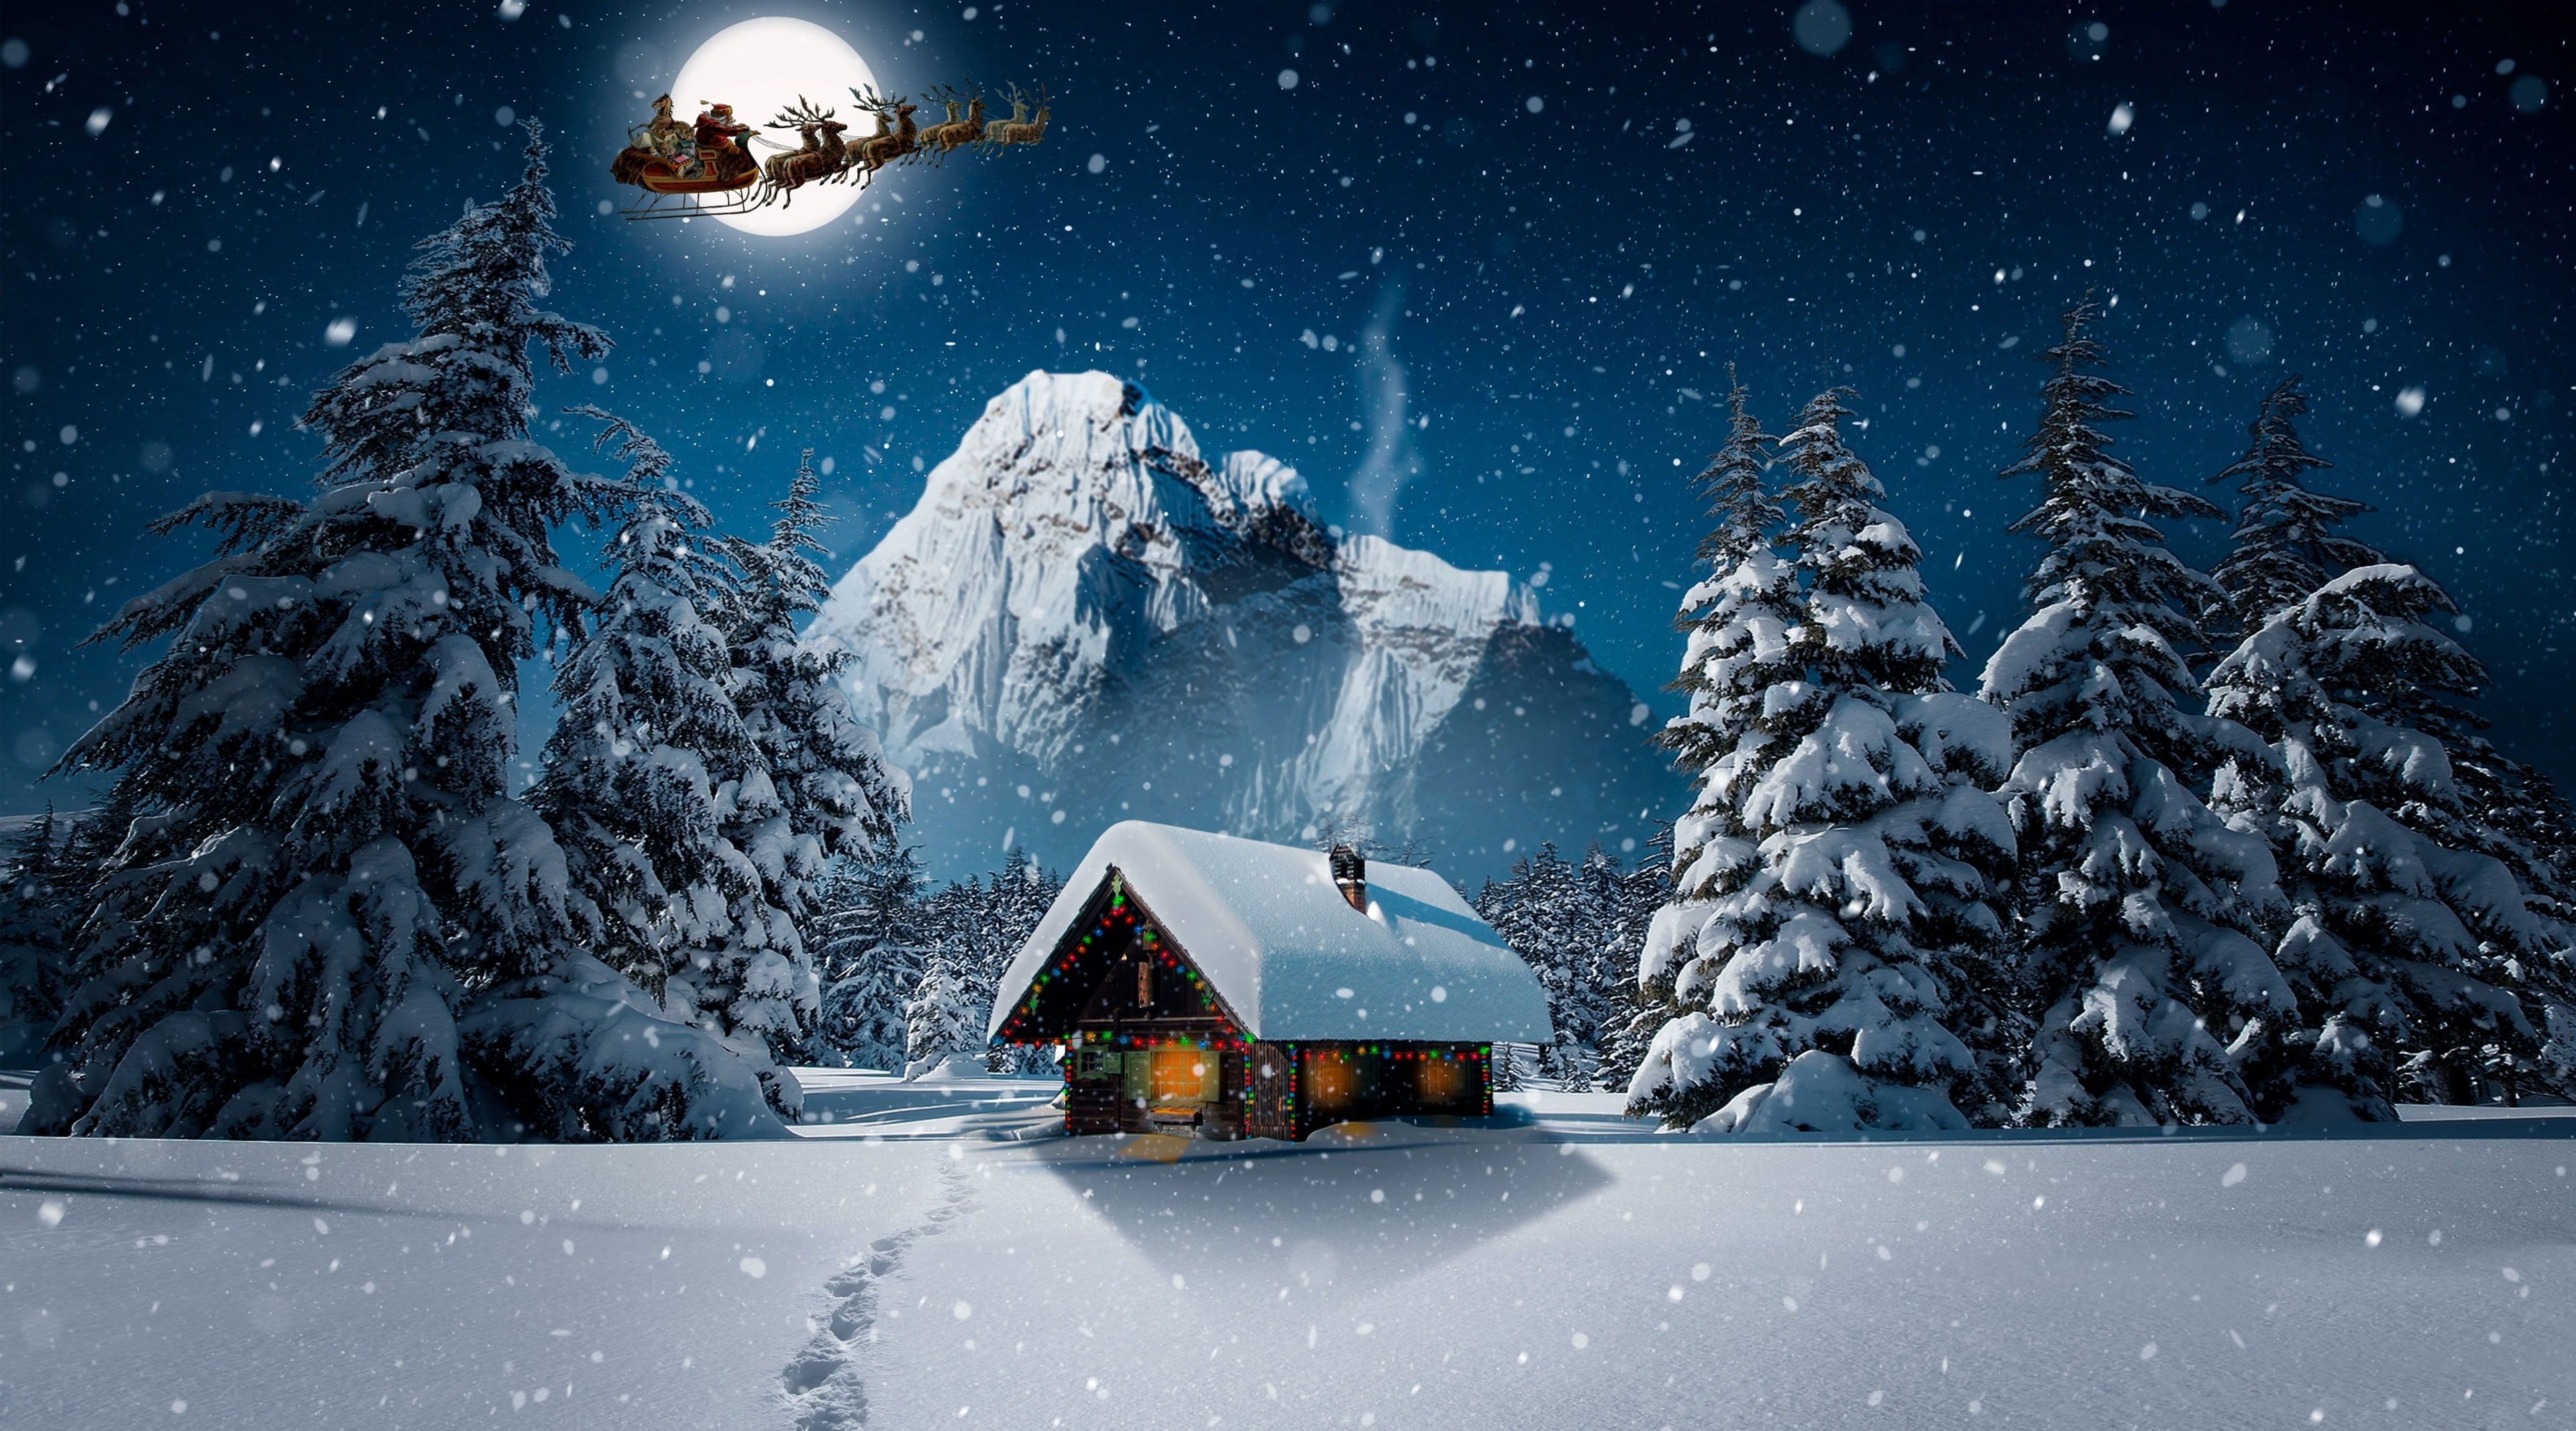  Desktop Weihnachten Hintergrundbild 3840x2133. Christmas Winter 4K wallpaper, Holidays, Landscape, Night, Design, Fantas. Fondos de pantalla de invierno, Fondo de pantalla navidad hd, Fondo de pantalla navidad